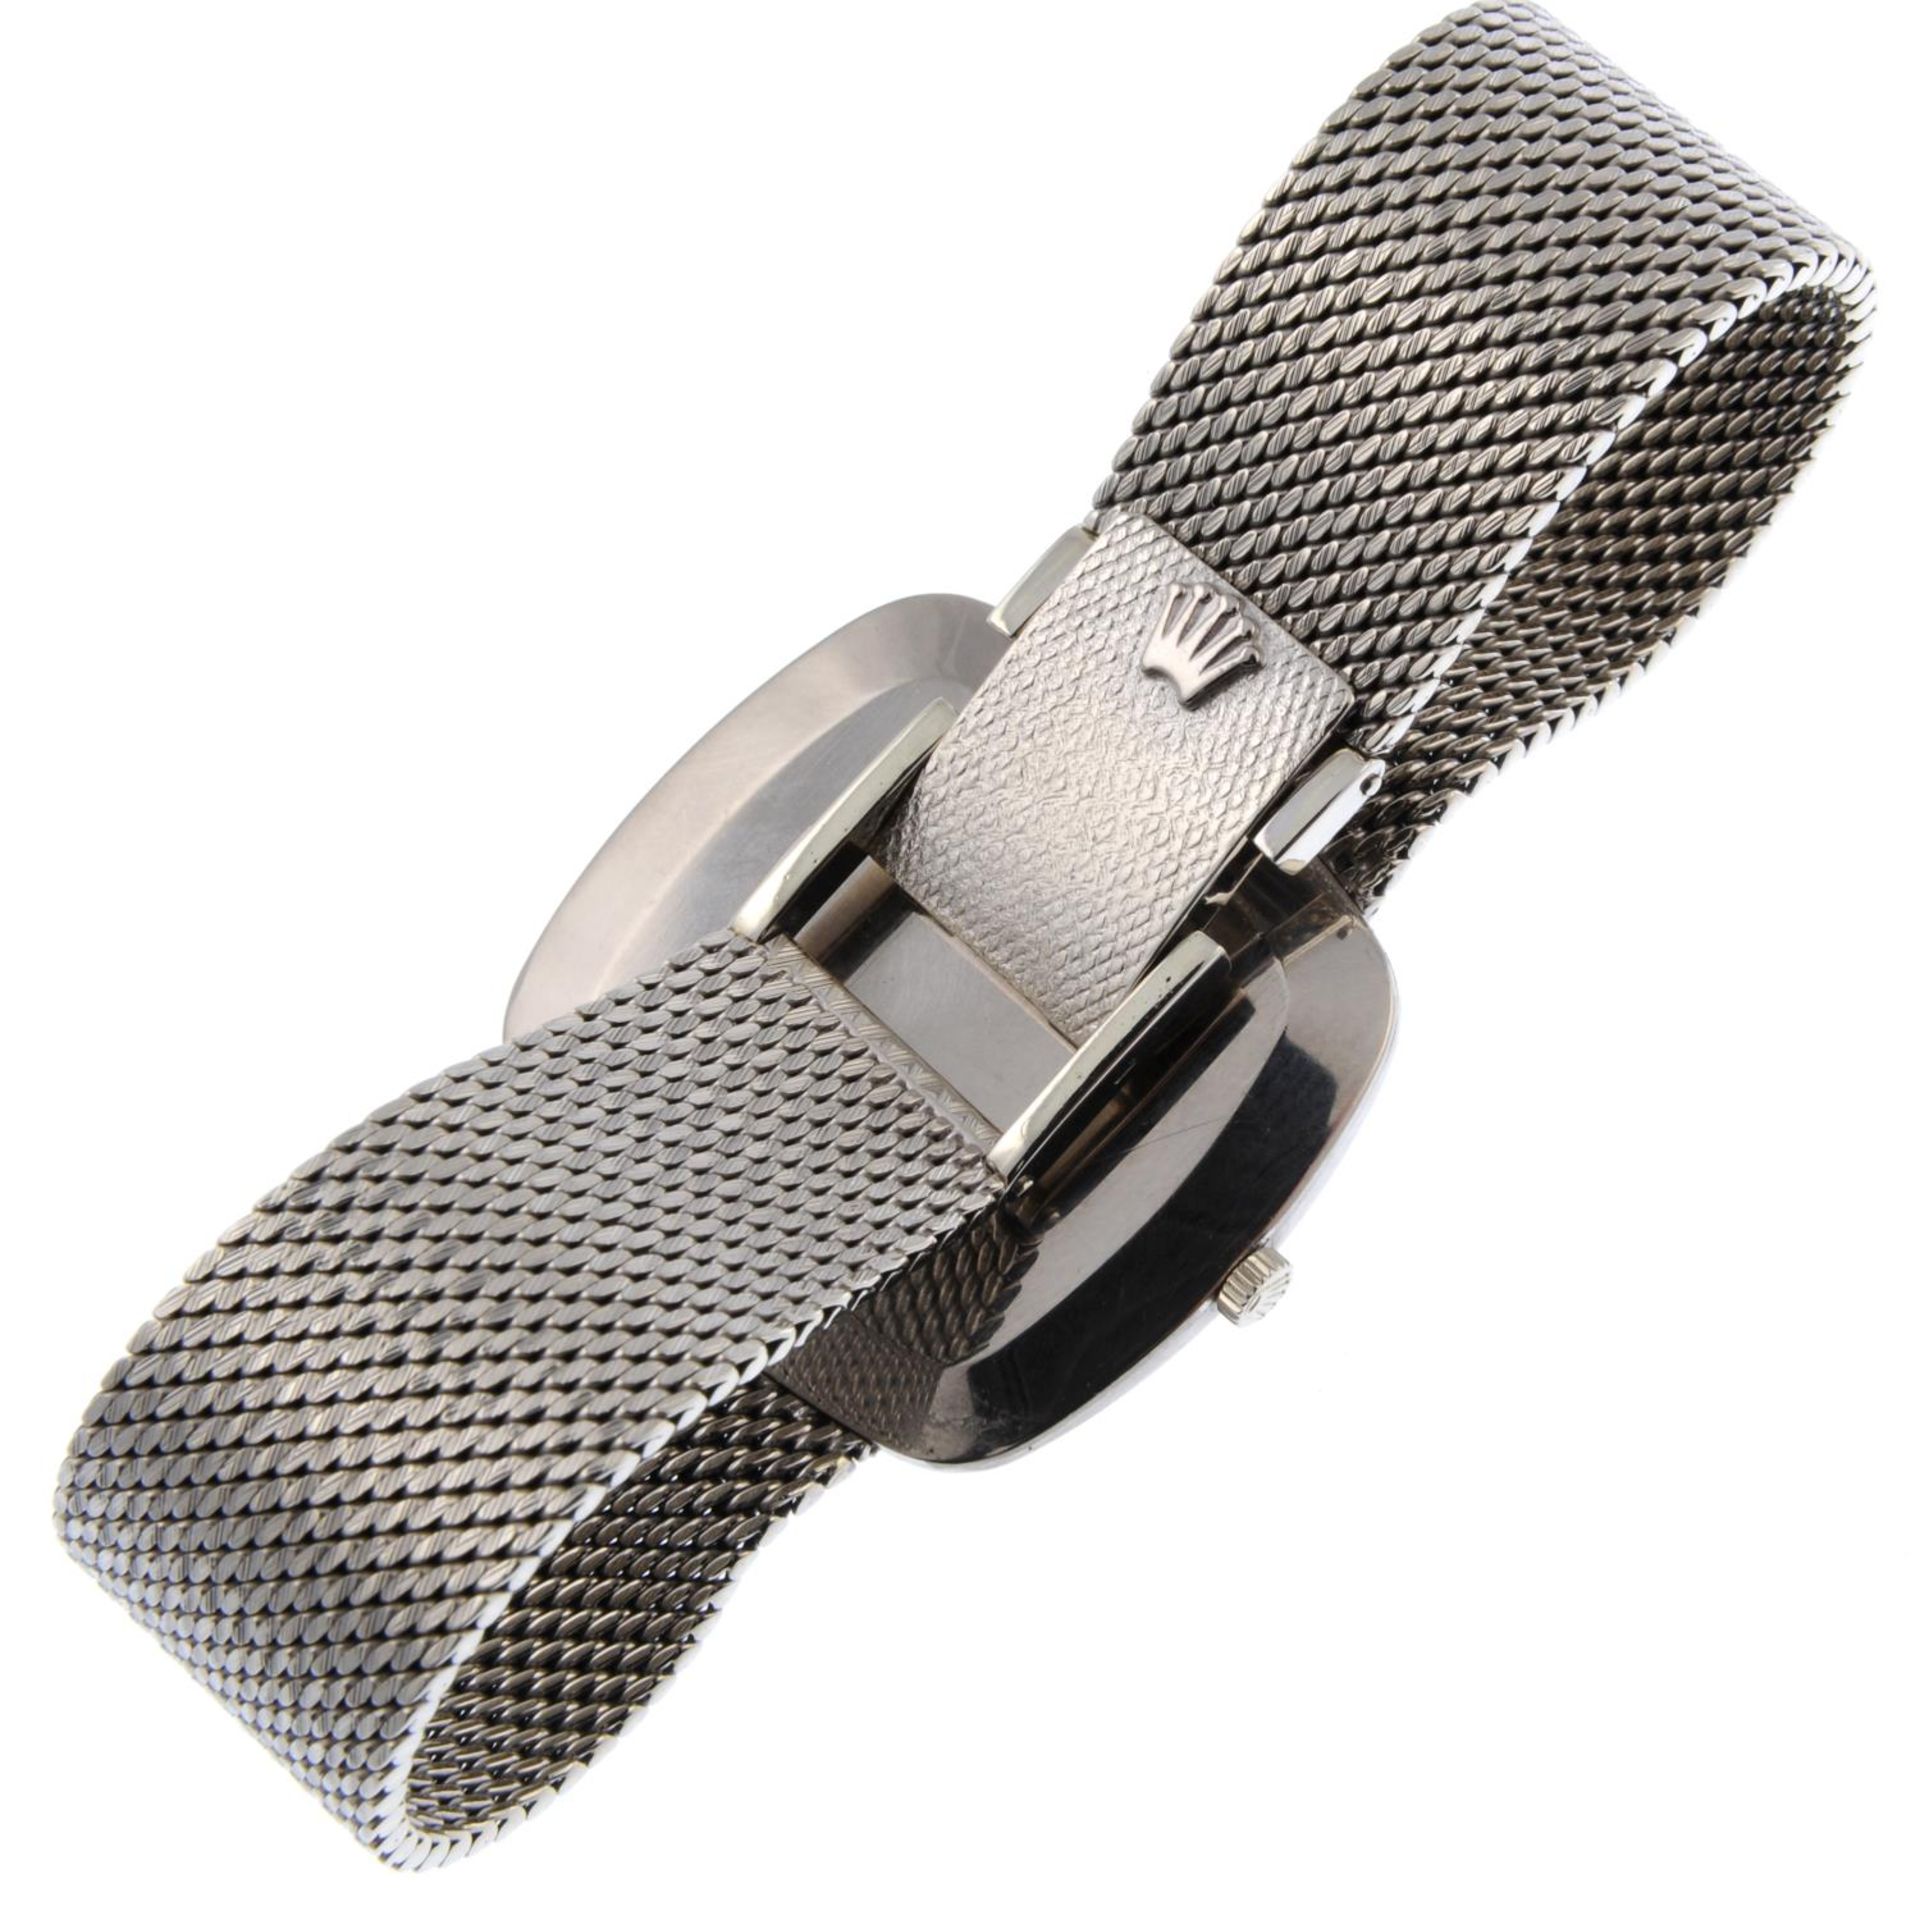 ROLEX - a Cellini braceletwatch. - Image 2 of 5